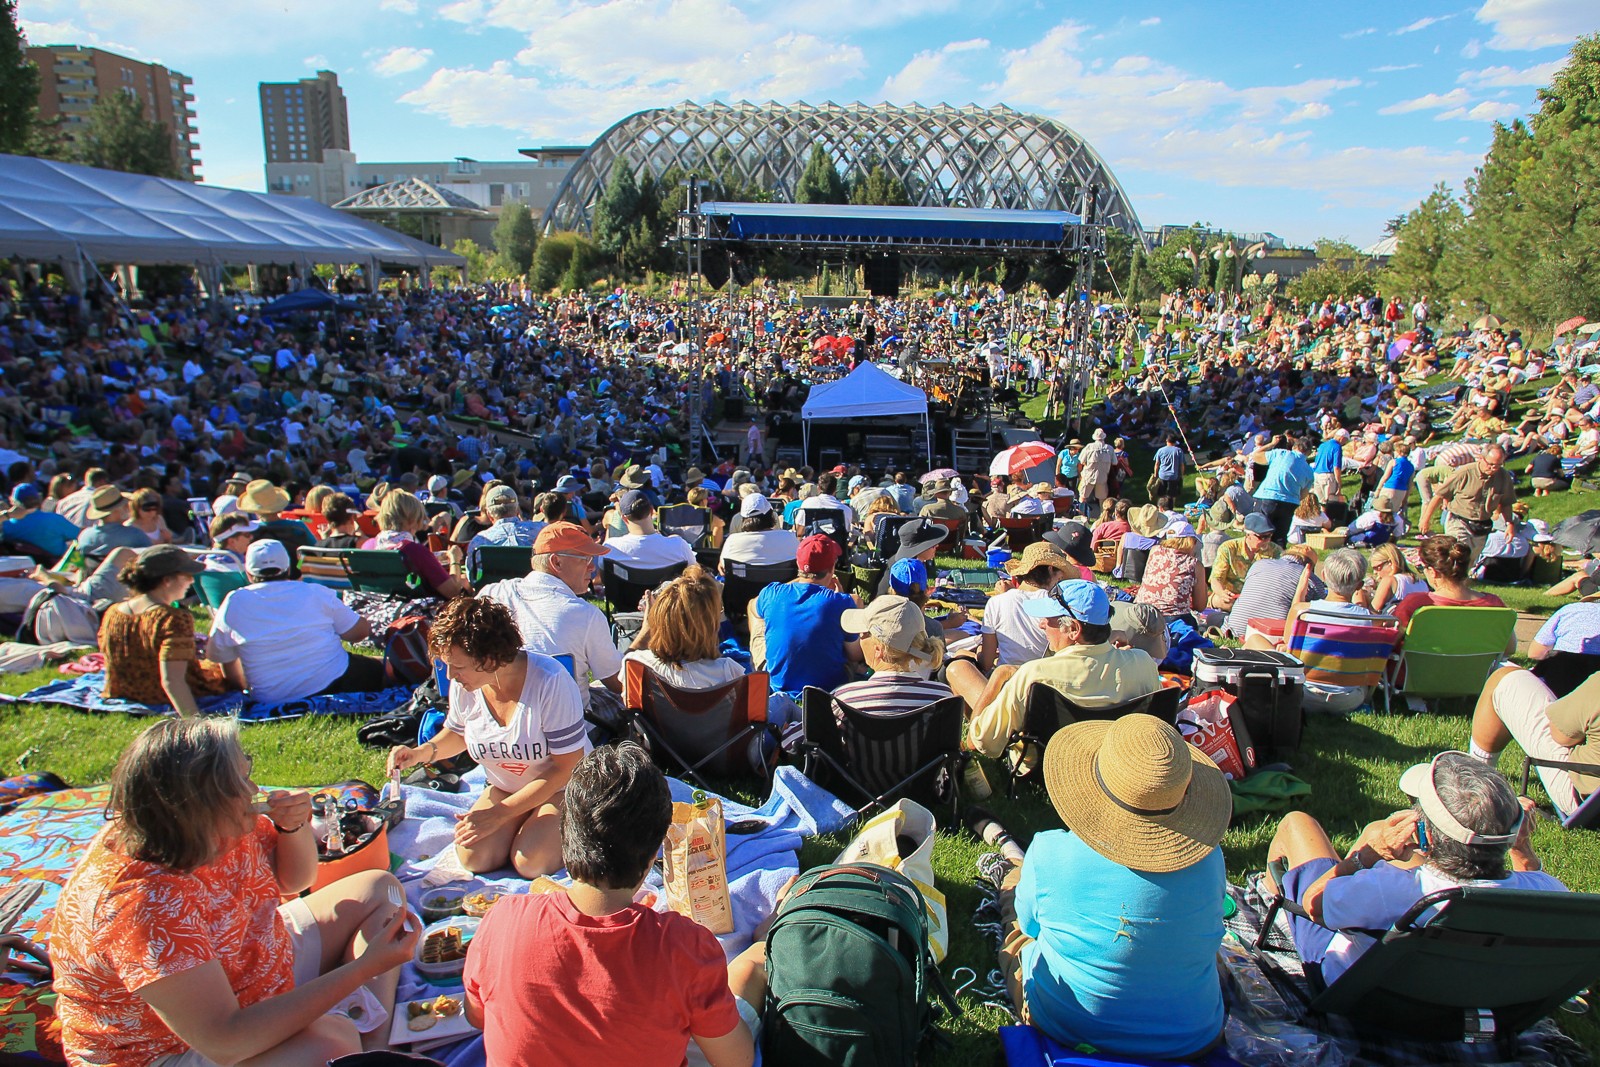 Denver Botanic Gardens Concert Seating Capacity Fasci Garden